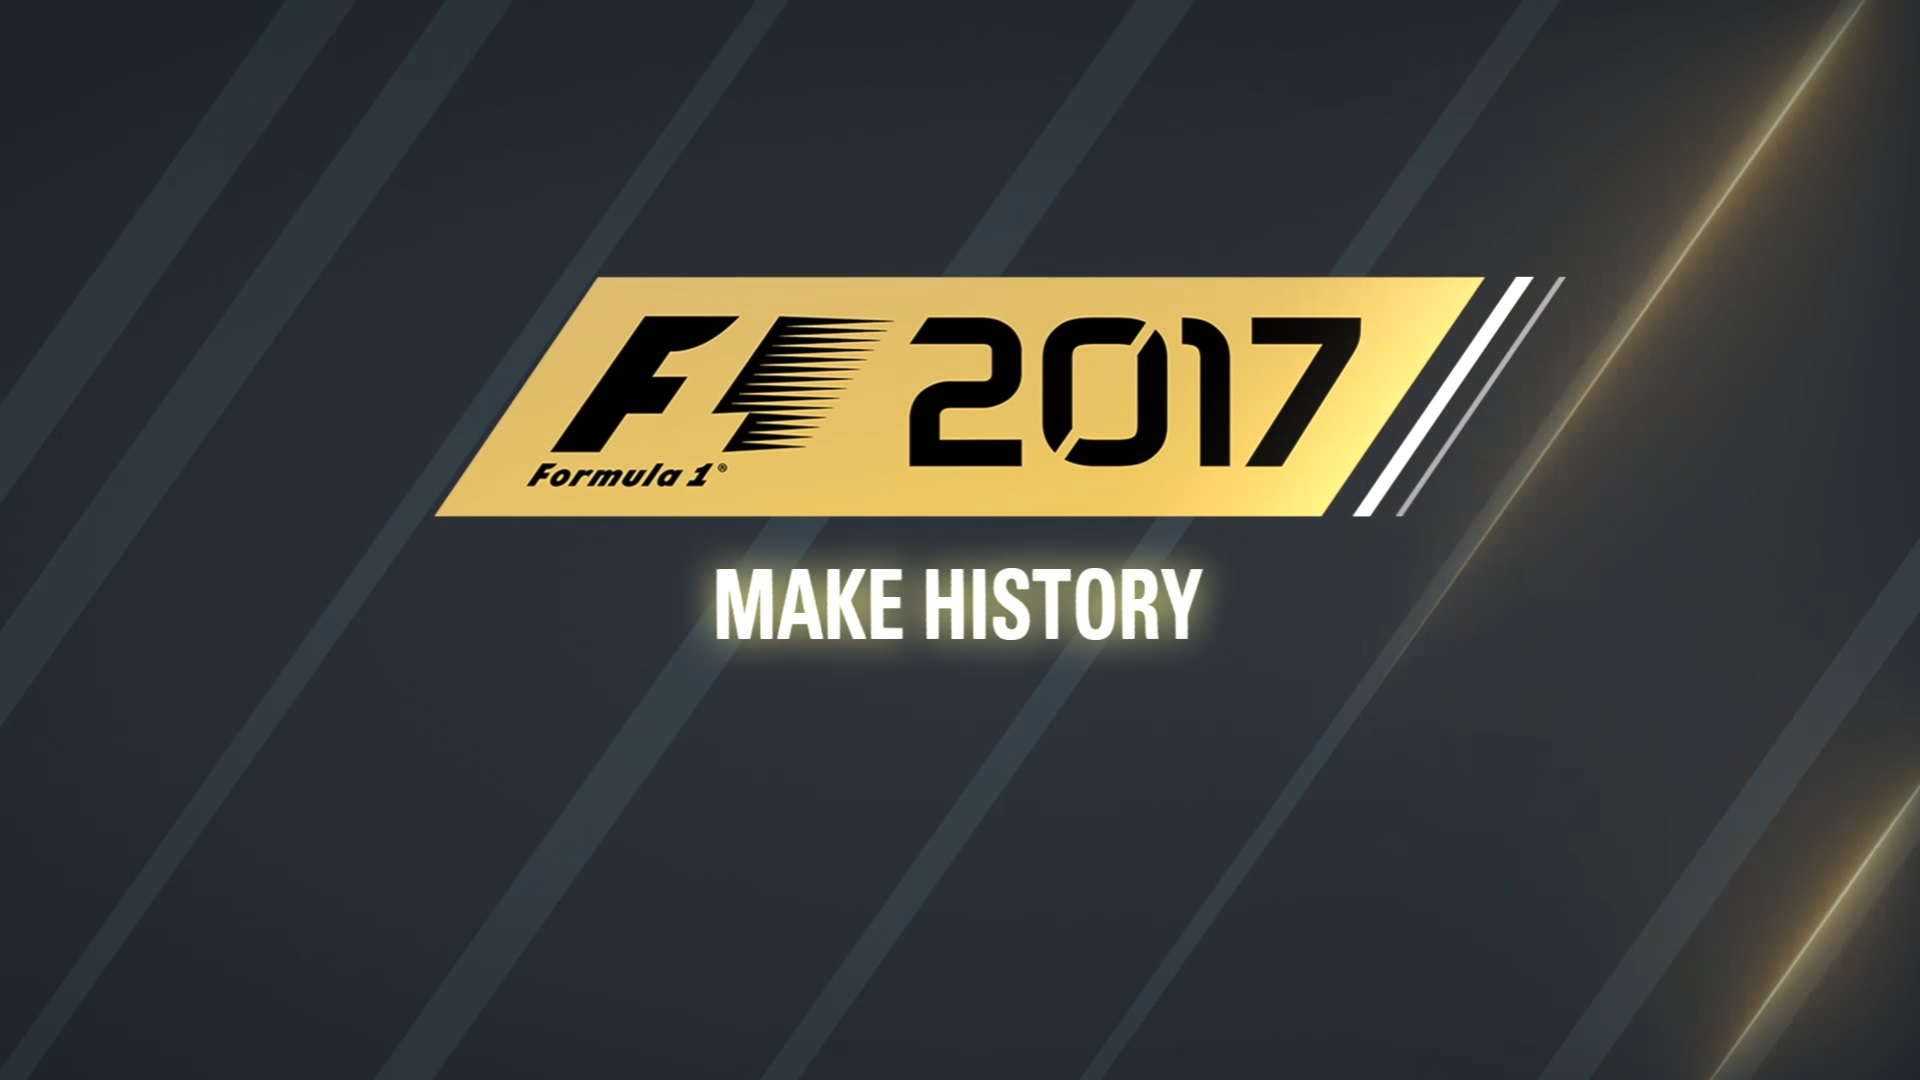 1 2017 ru. Making History 2017 logo.